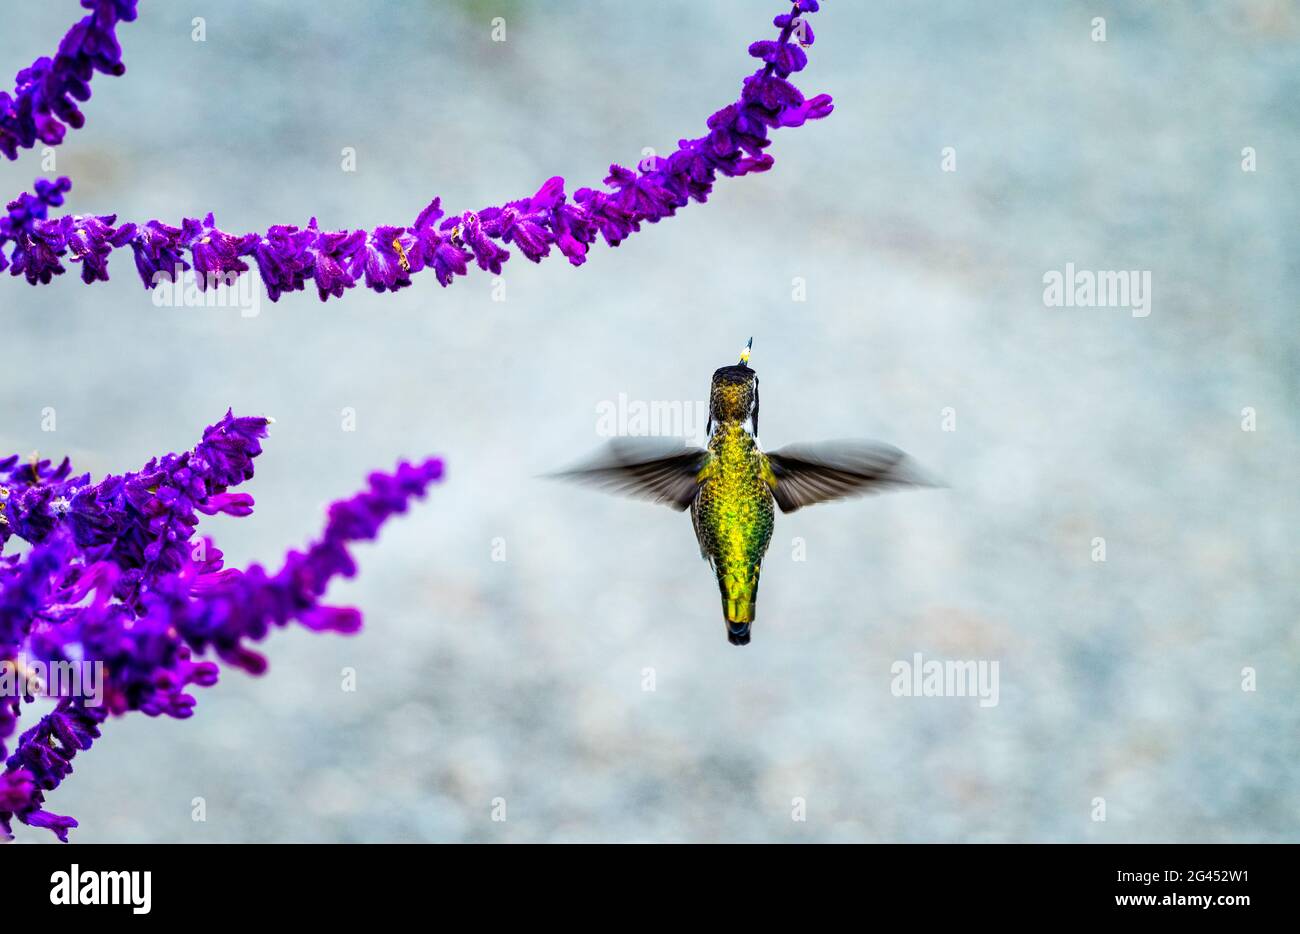 Single hummingbird hovering near purple flowers Stock Photo